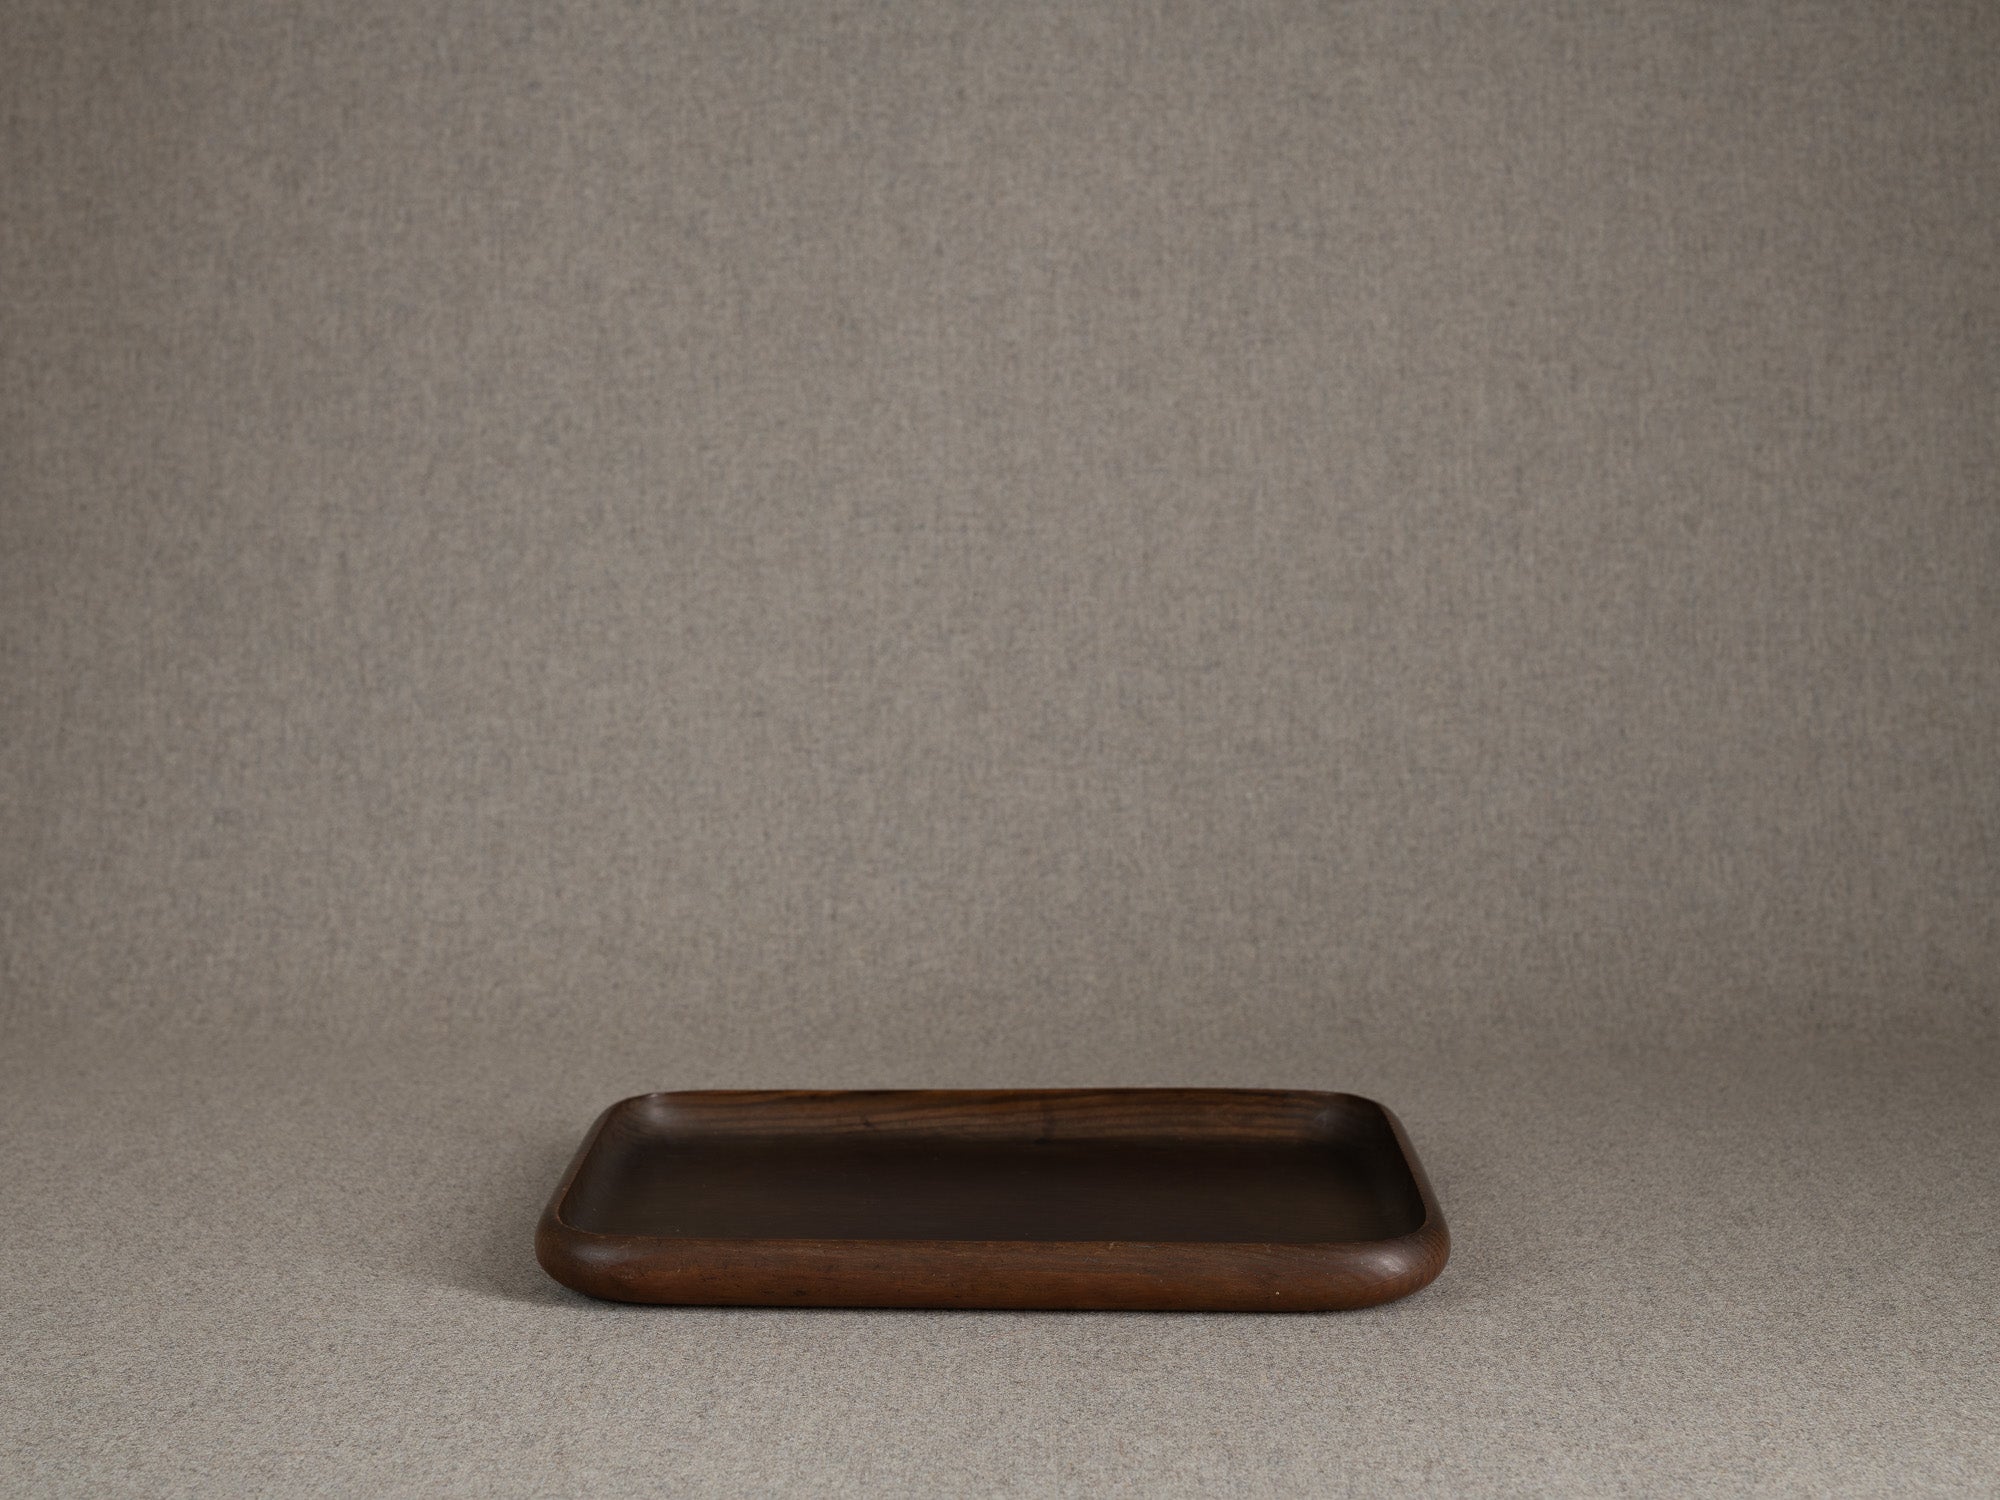 Ancien plateau monoxyle senchabon en bois de zelkova, Japon (Fin de l'ère Meiji / début ère Shōwa)..Senchabon monoxyle tray in keyaki zelkova wood, Japan (Late Meiji / early Showa era)